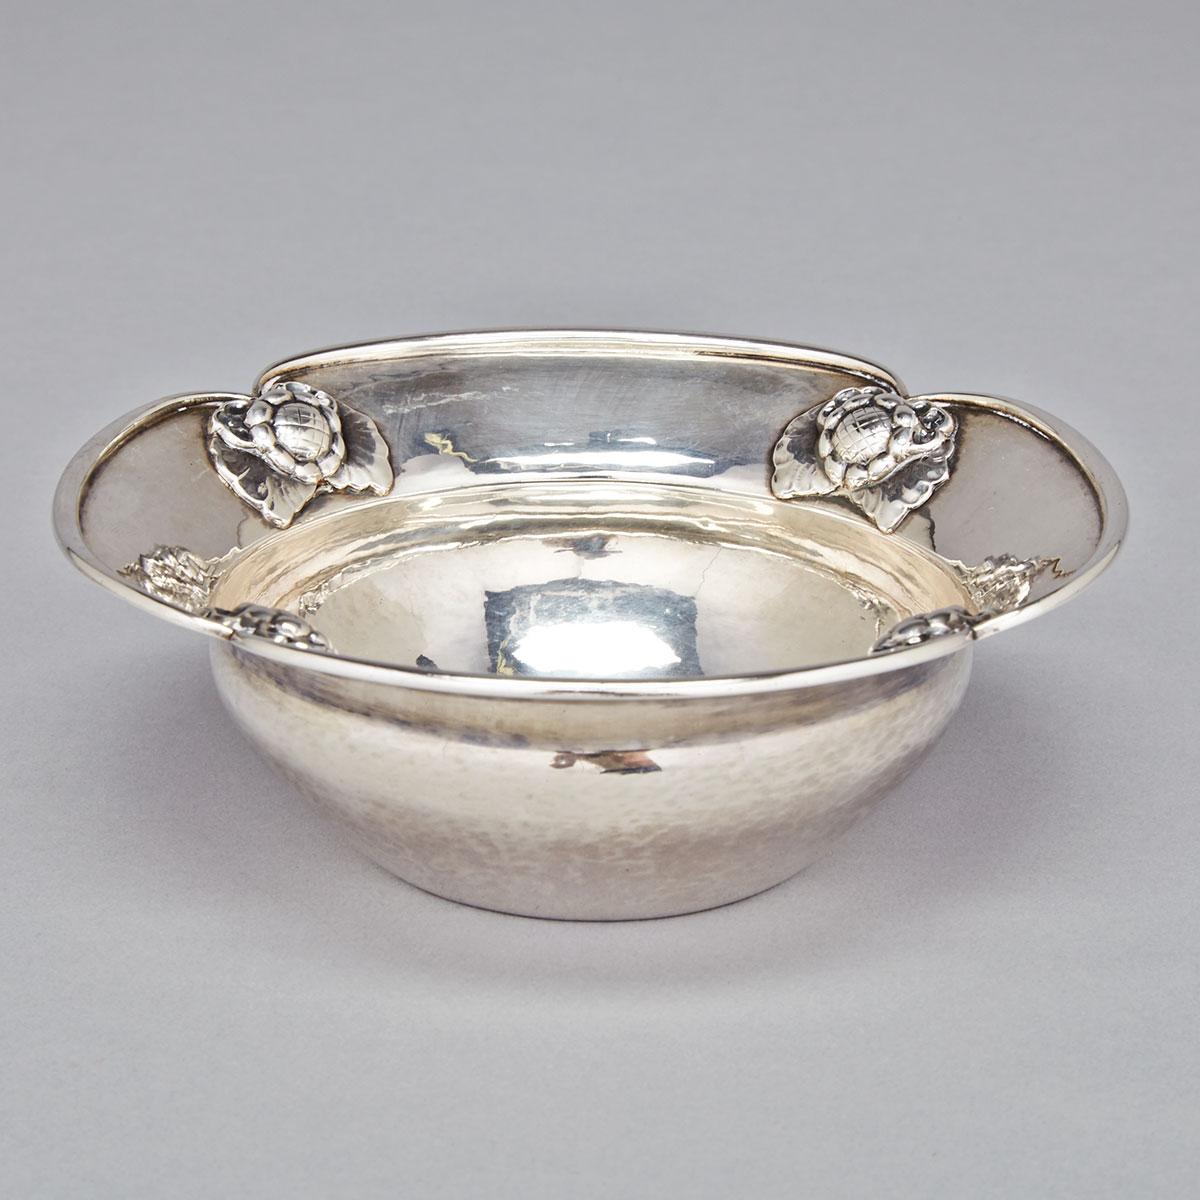 Danish Silver Bowl, #25, Georg Jensen, Copenhagen, 1923